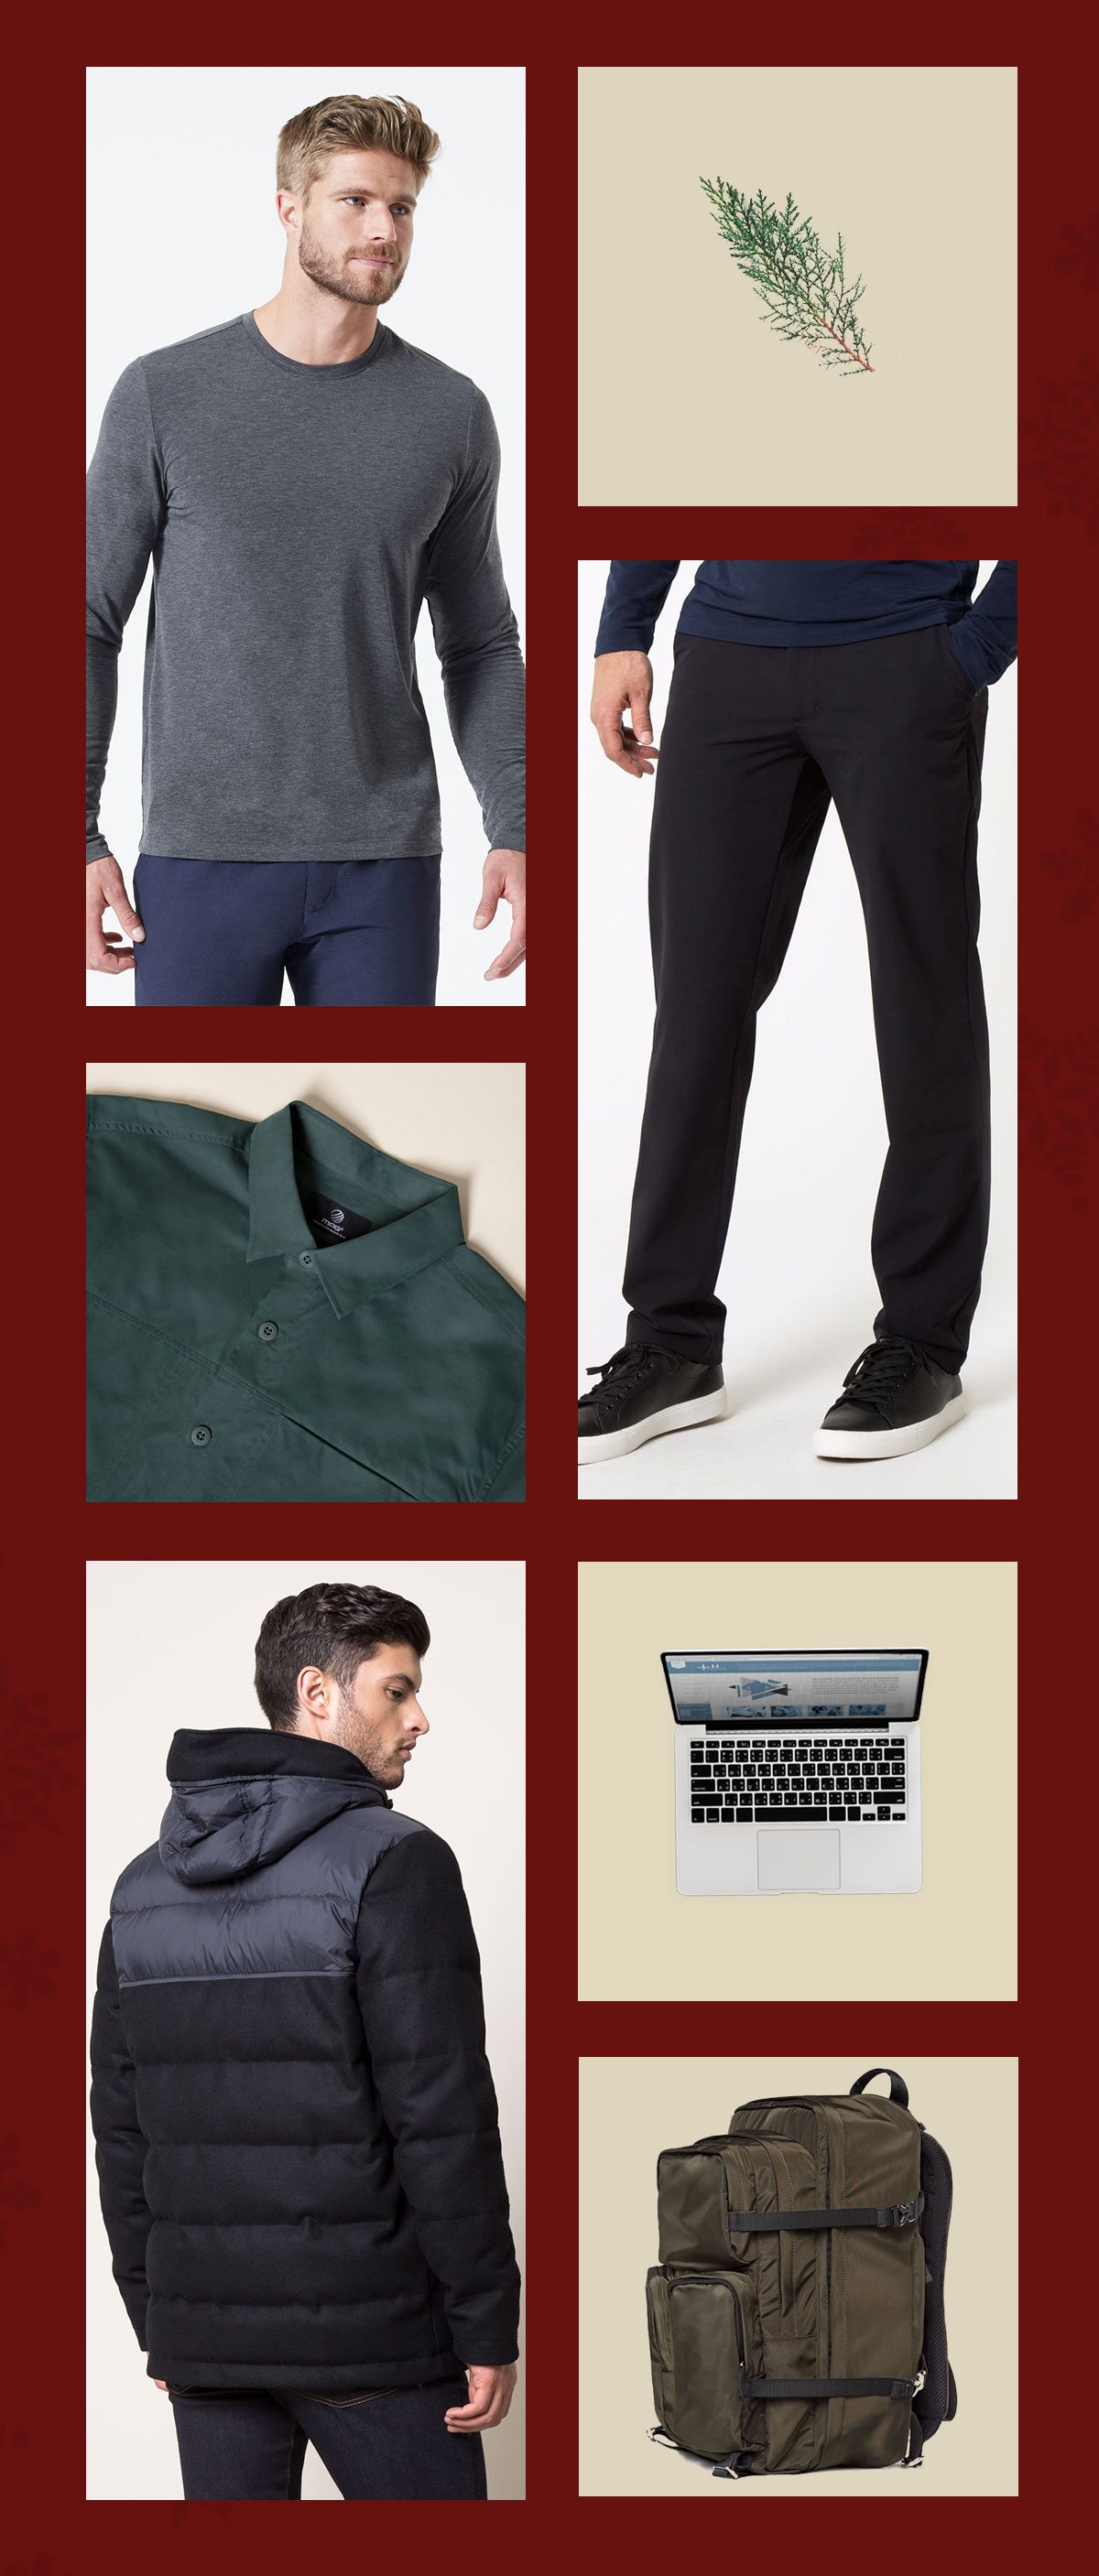 Working Man Gift Ideas - Oxford 3.0 shirt, Evolve Blazer, Venture Jacket and more.